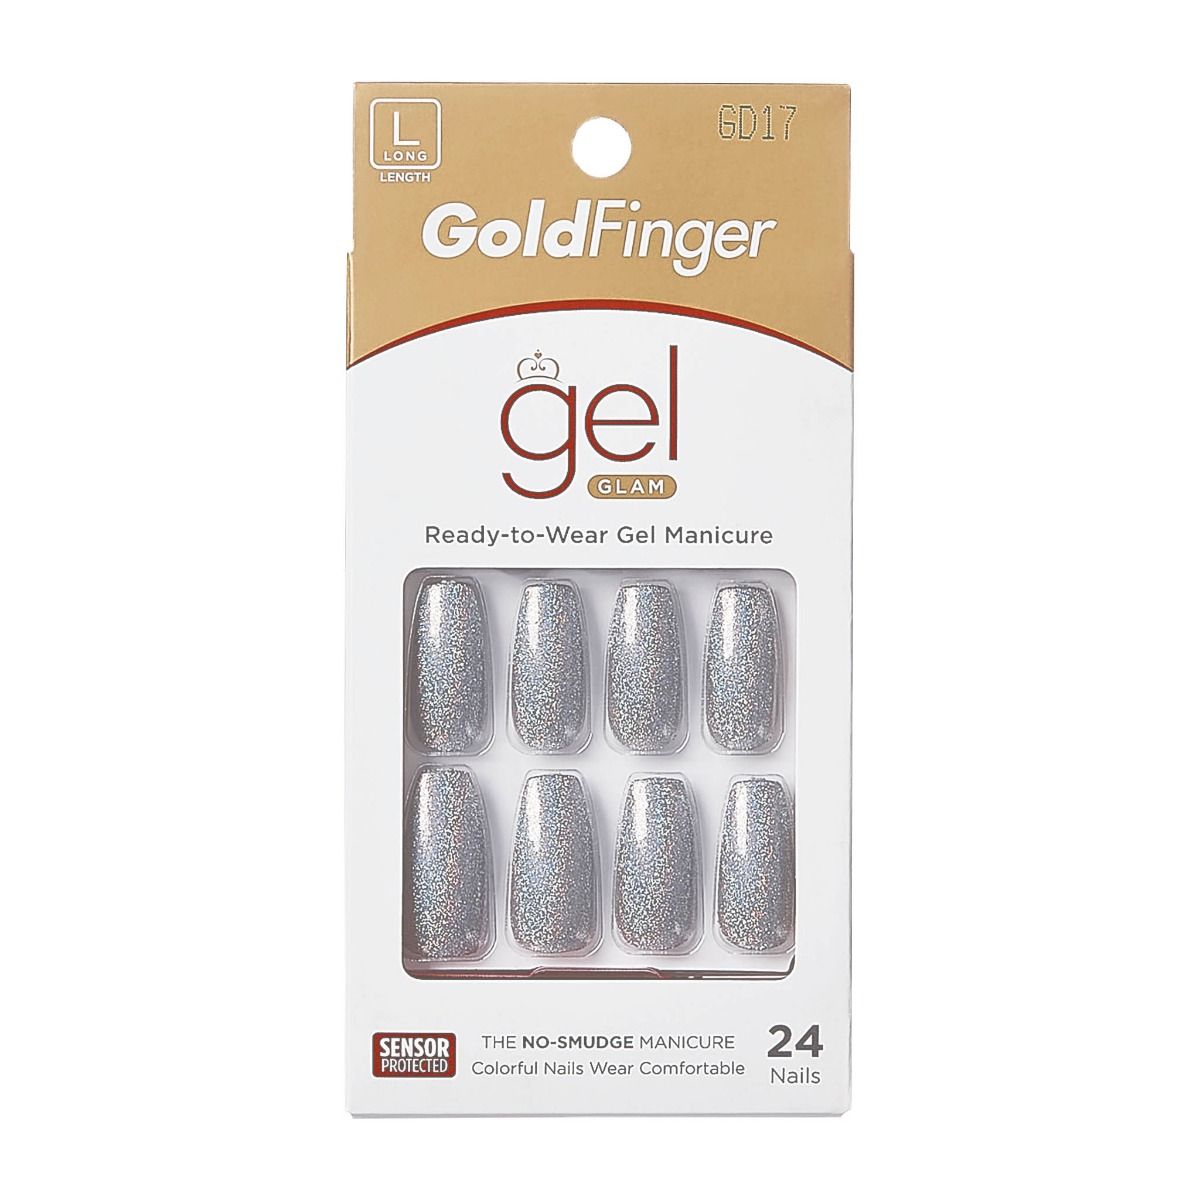 Kiss Goldfinger Gel Glam Press On Nails GD17